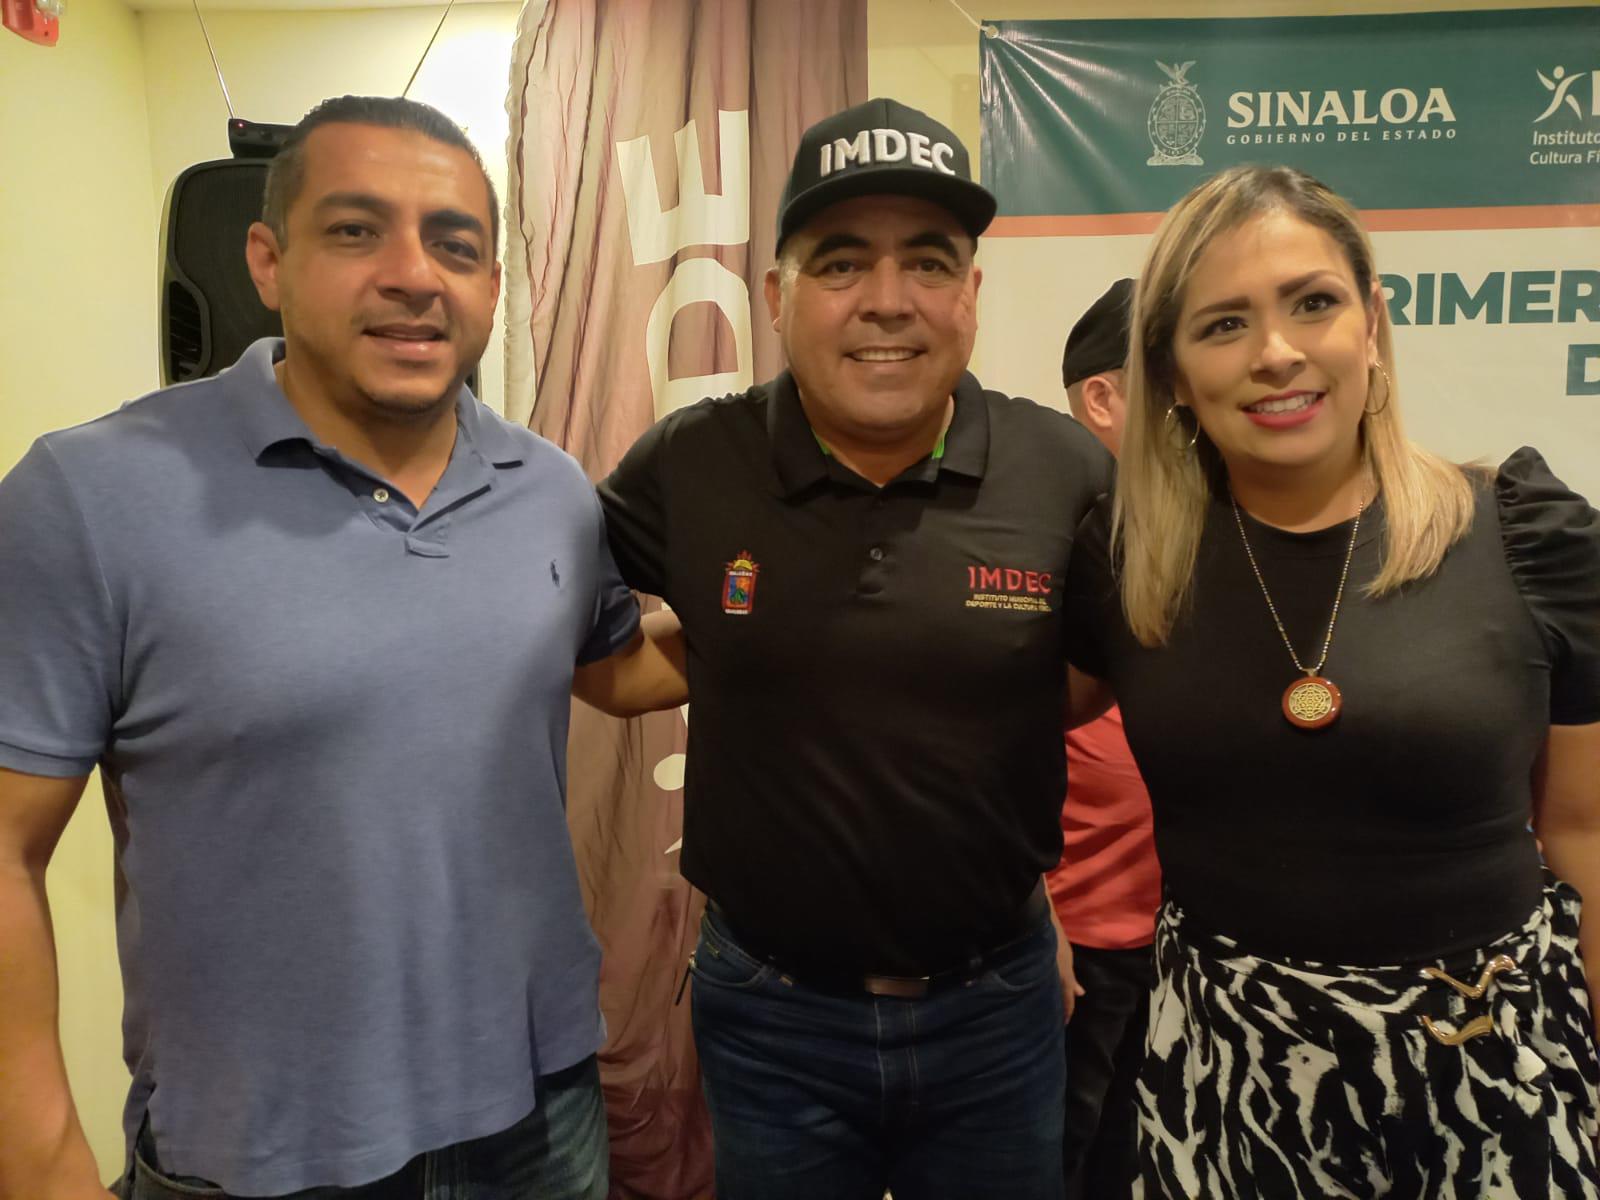 $!Anuncian en Culiacán Primera Copa Municipal de Natación Curso Corto Imdec